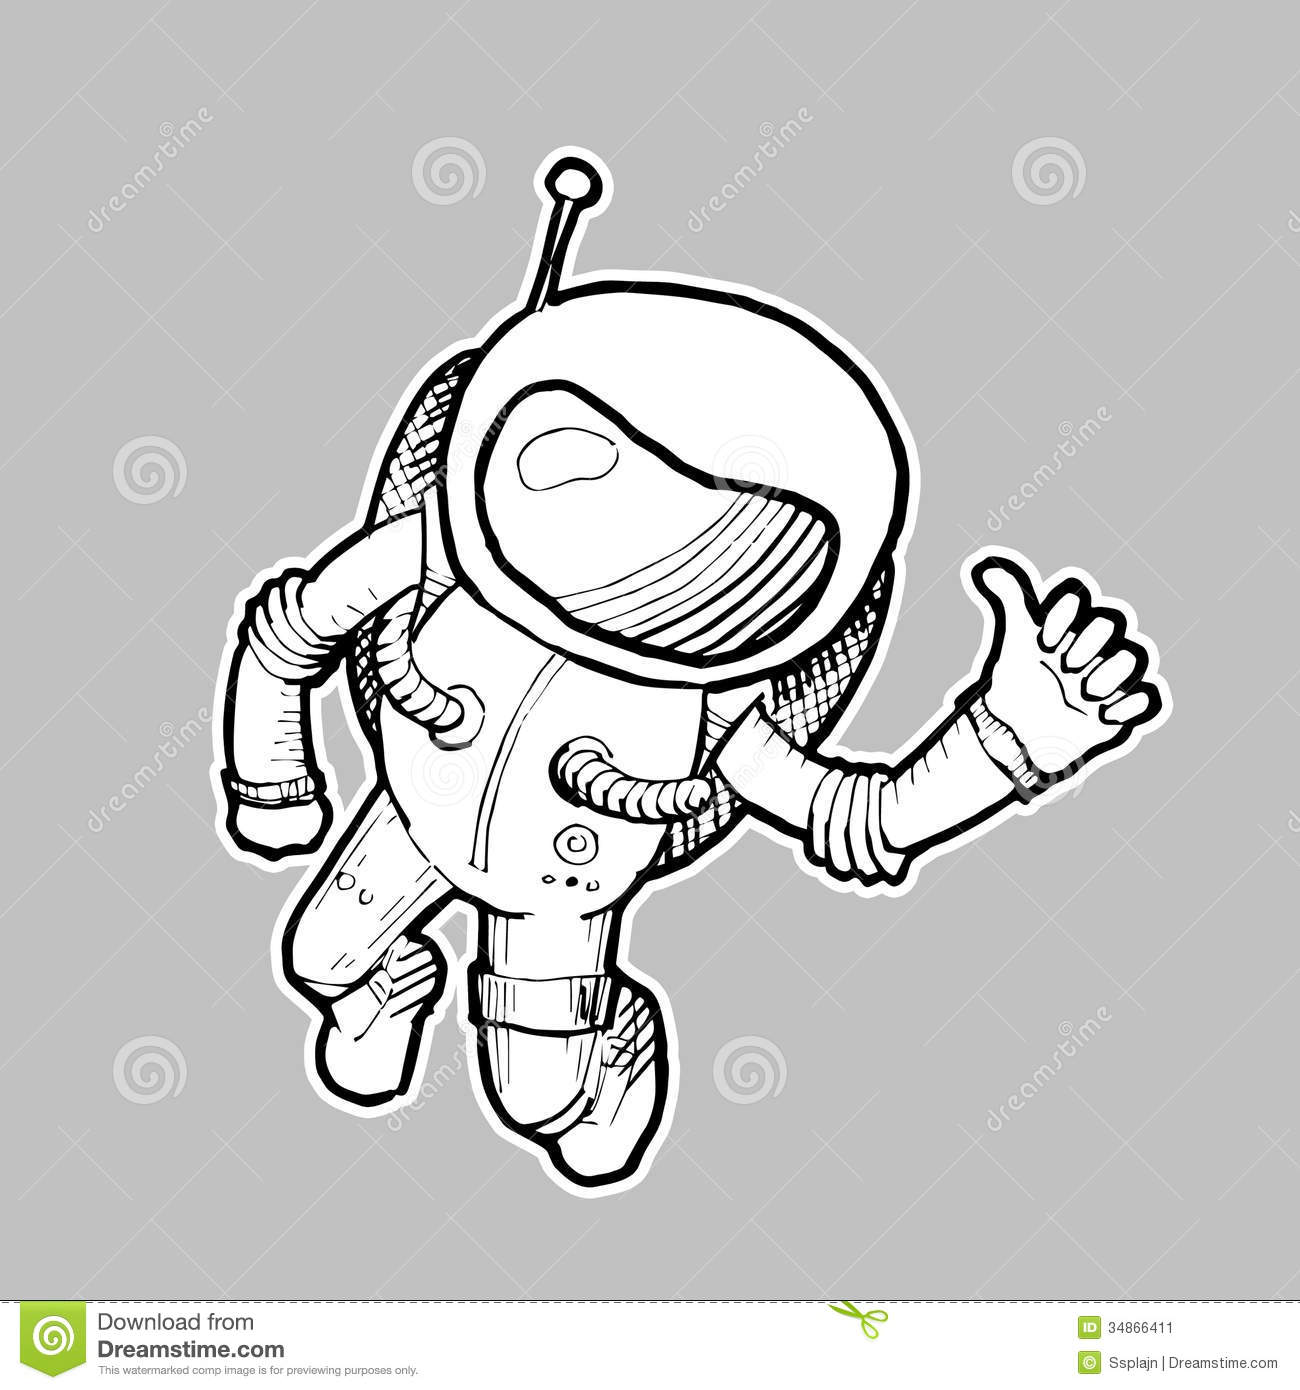 Astronaut Illustration Black And White On Grey Background